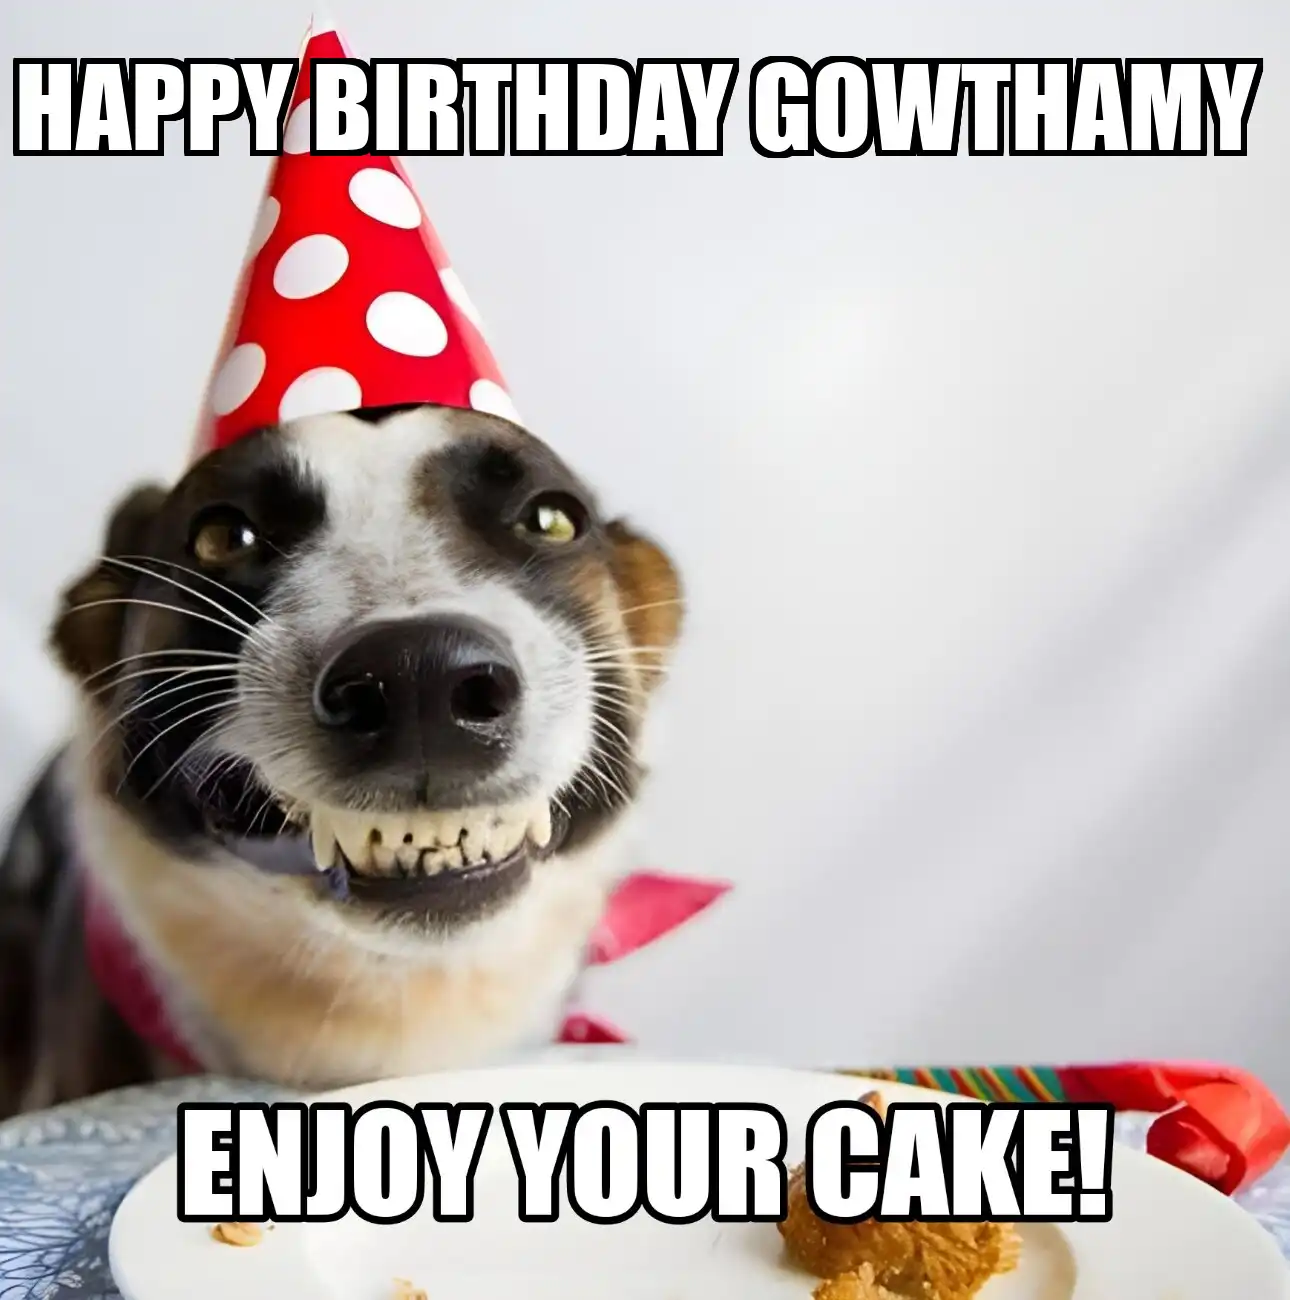 Happy Birthday Gowthamy Enjoy Your Cake Dog Meme